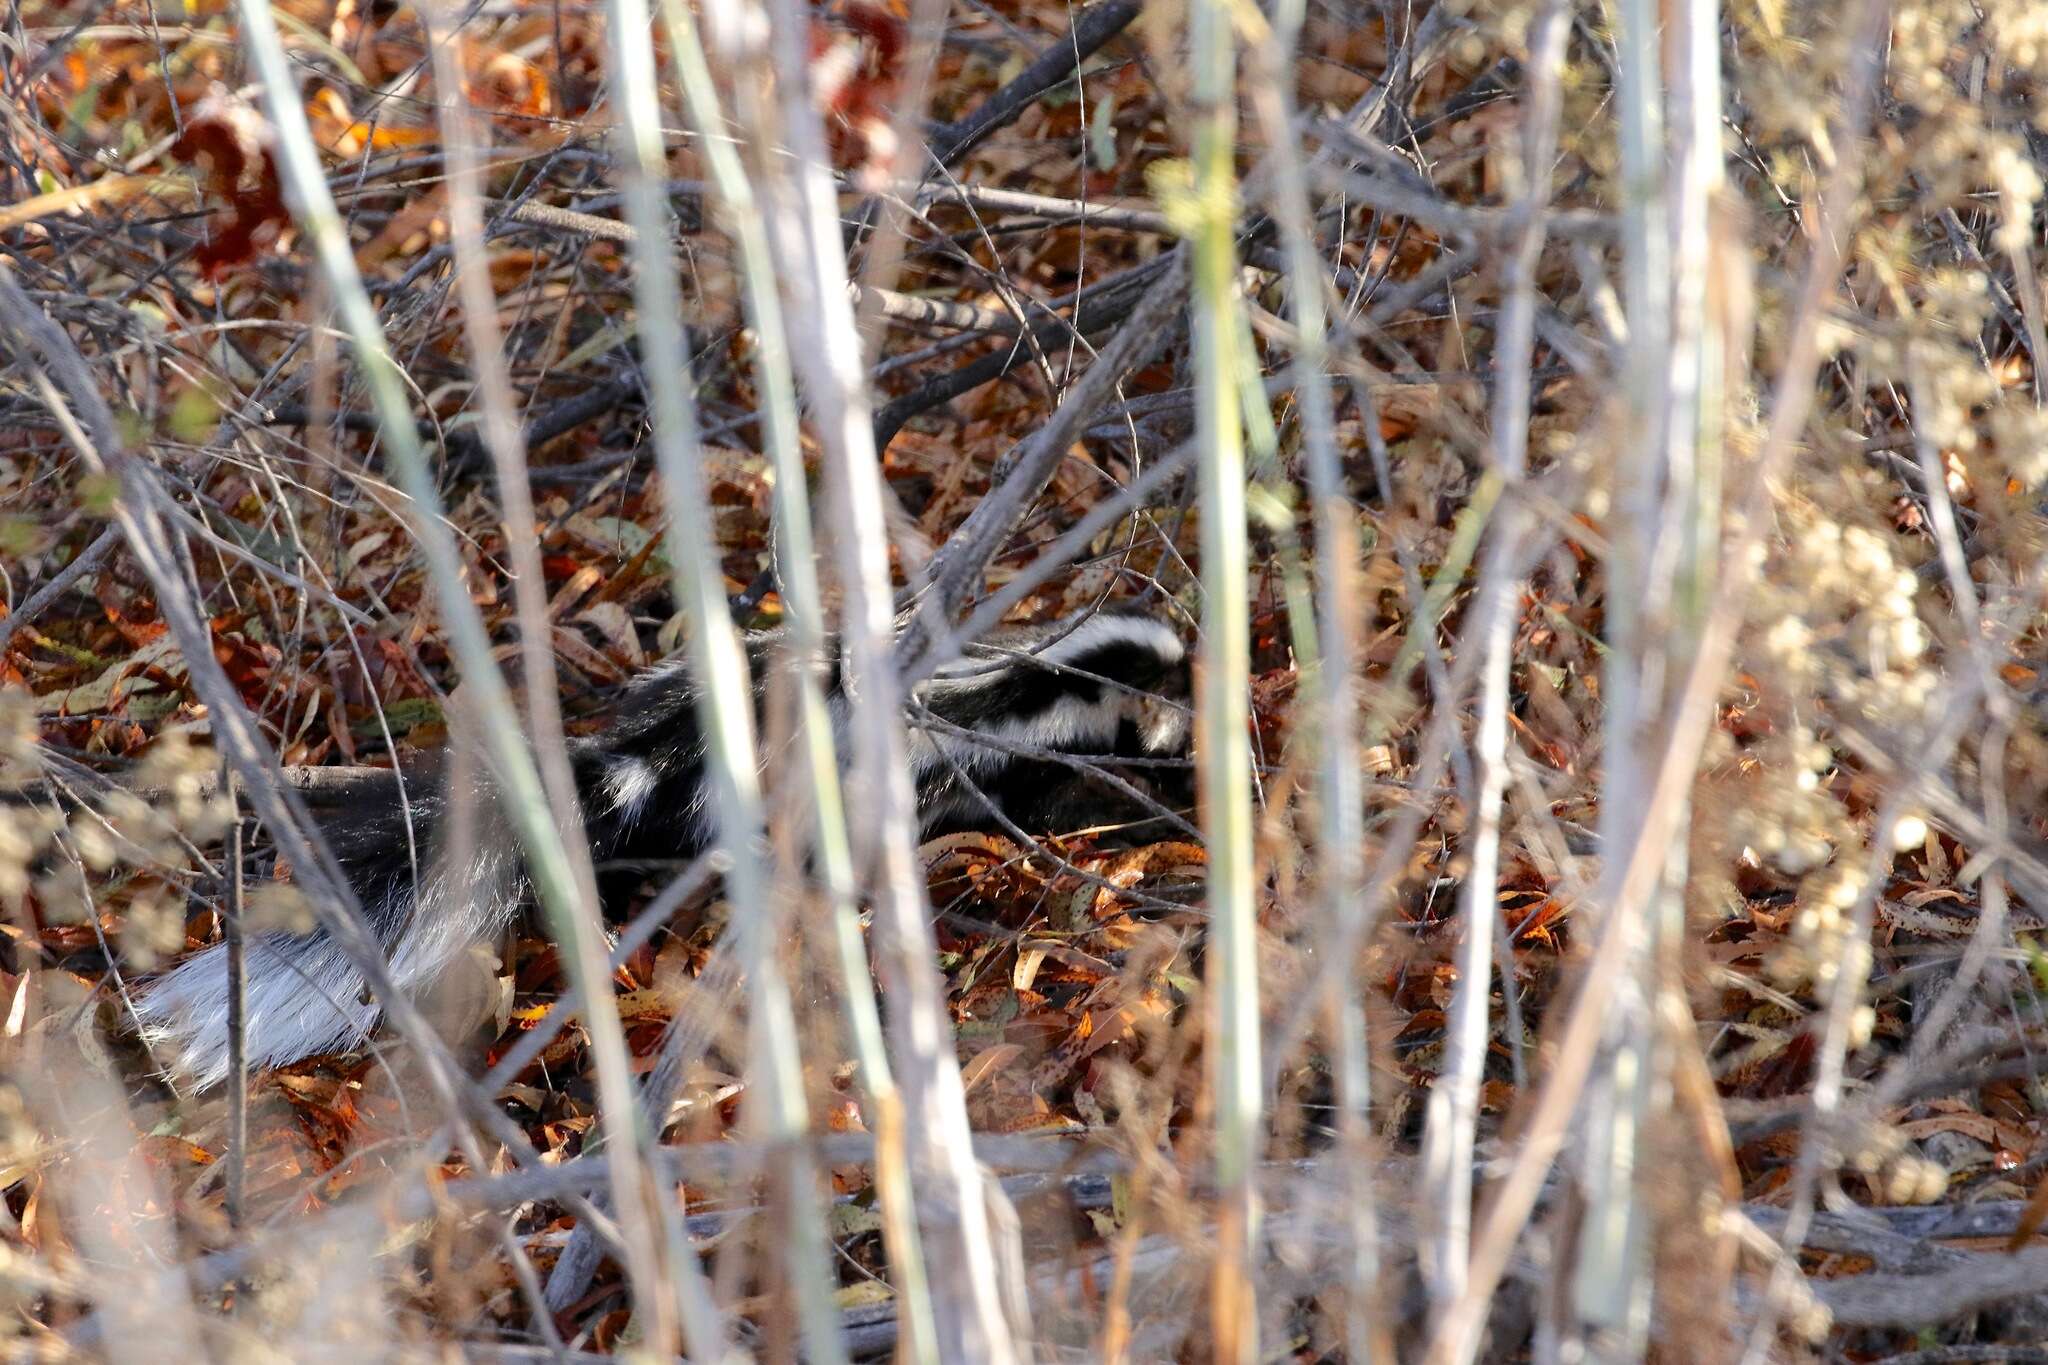 Image of Western Spotted Skunk